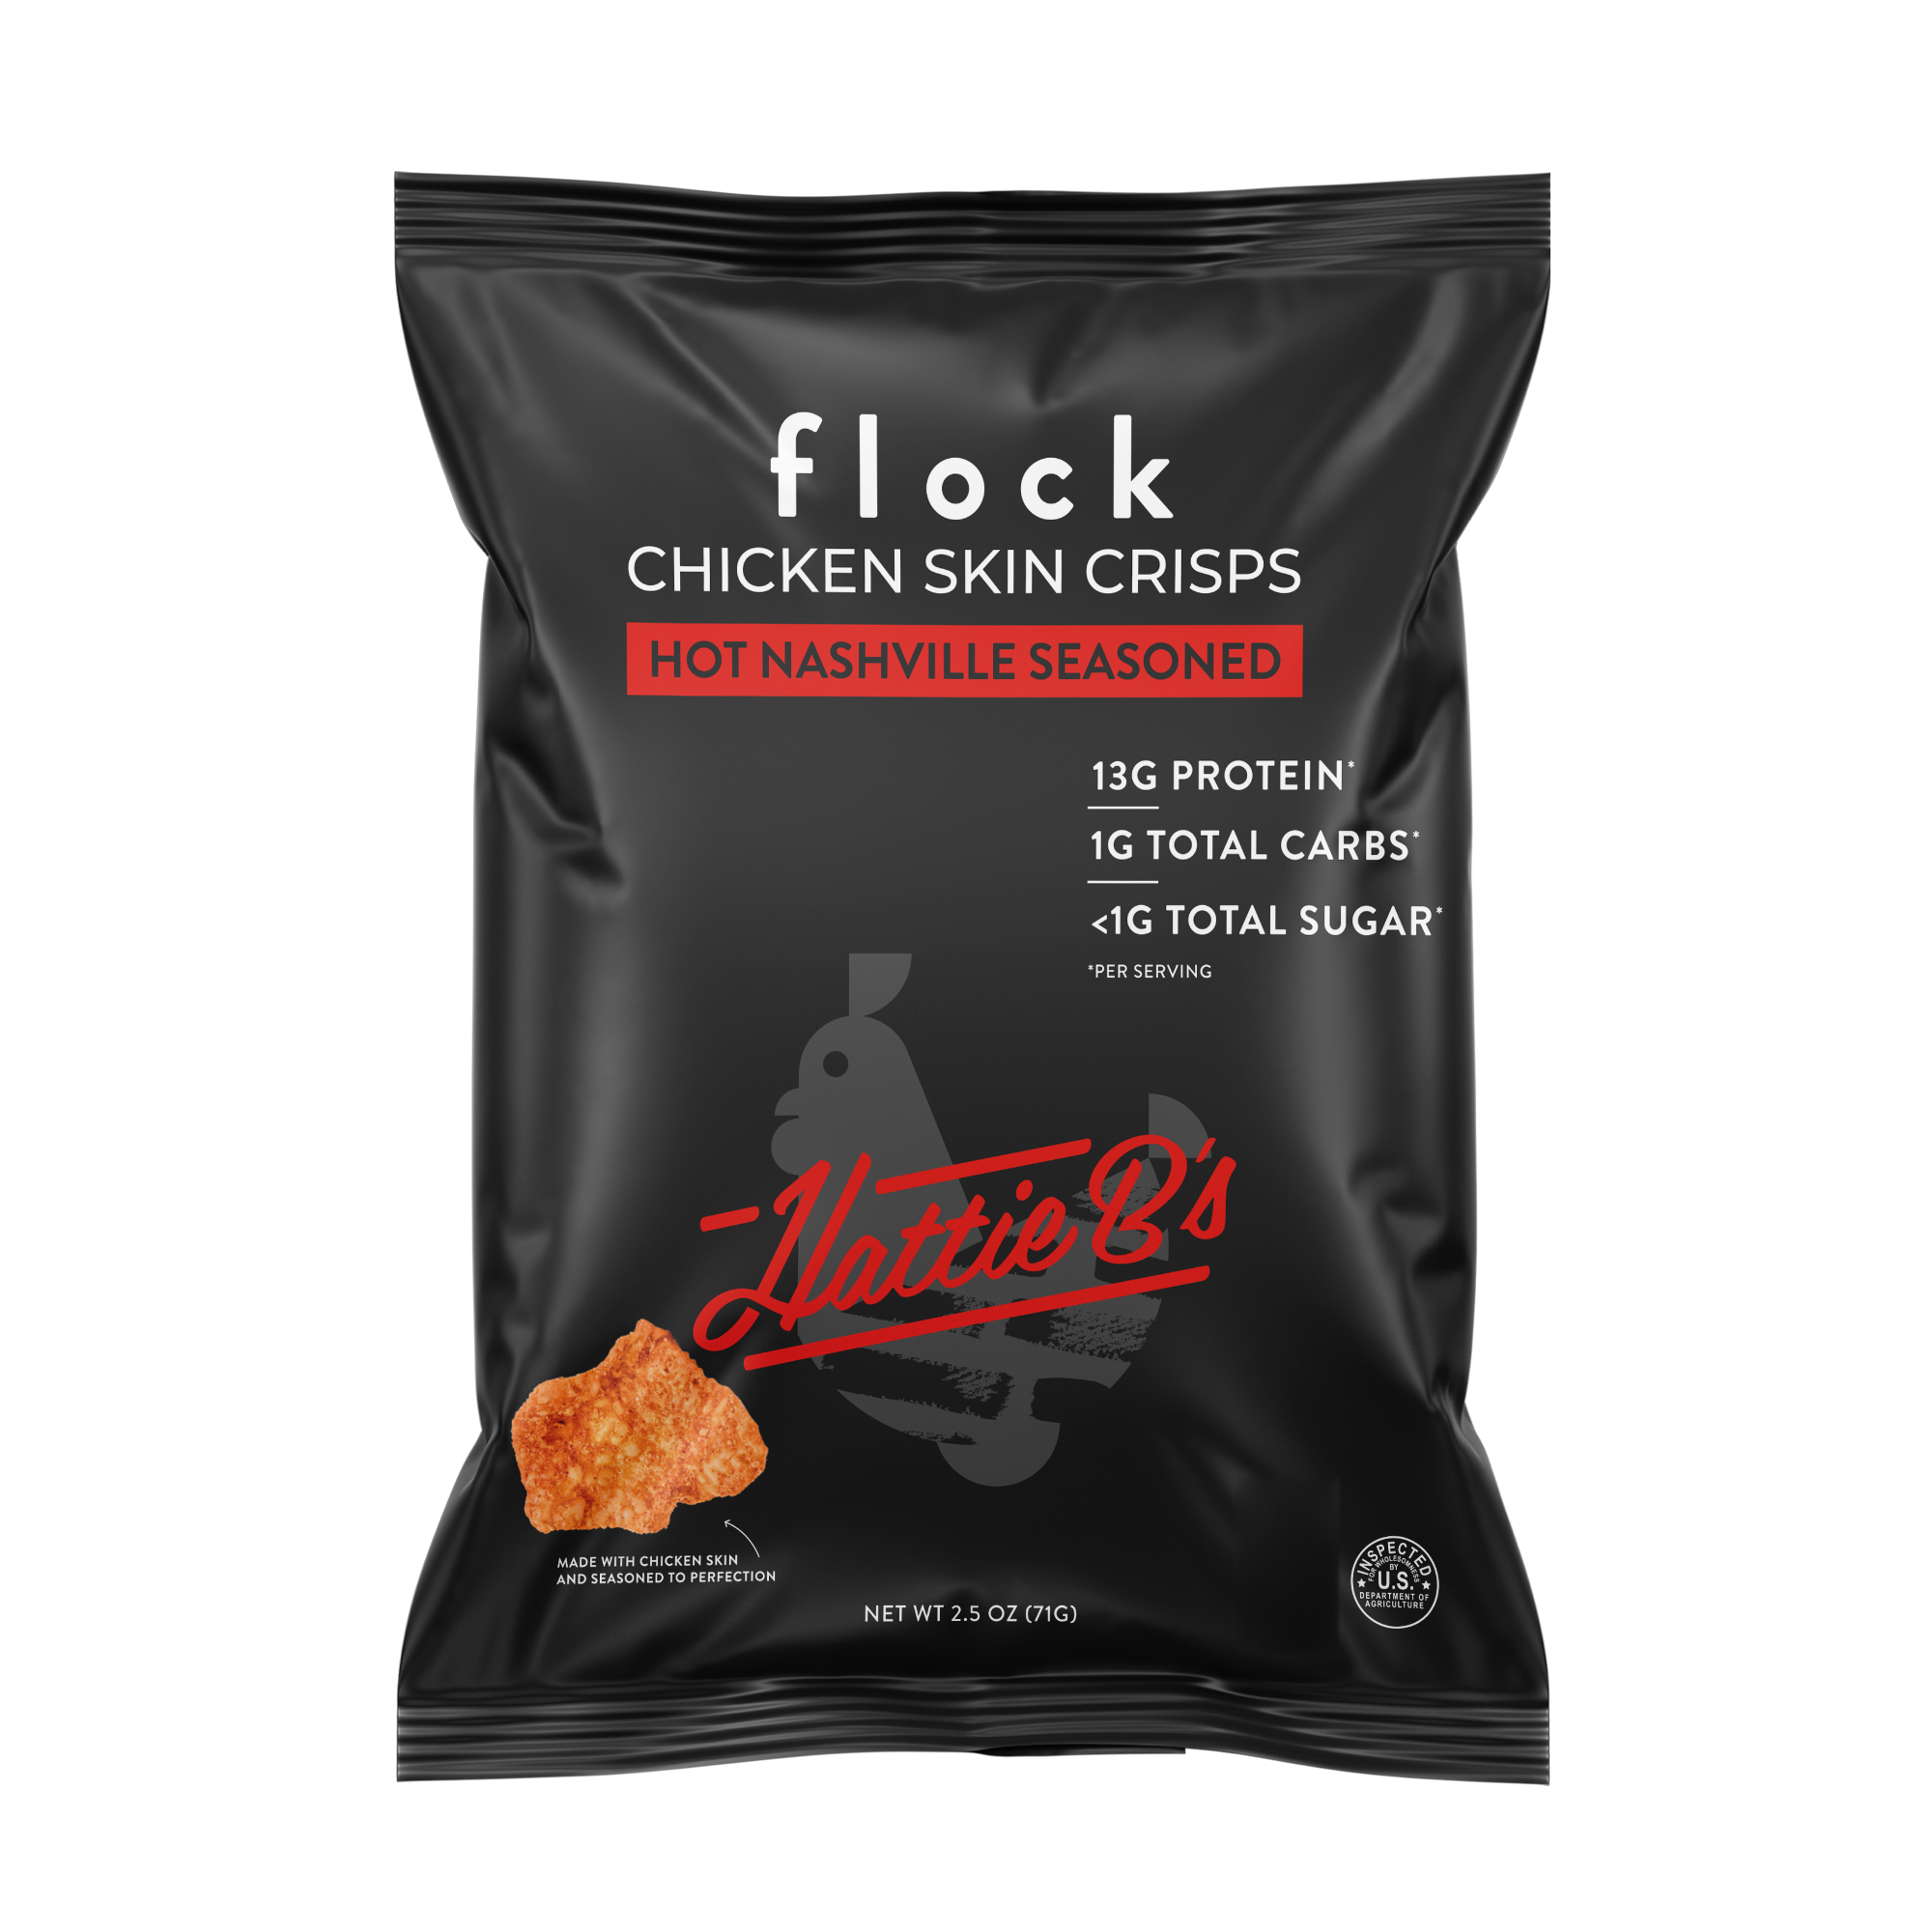 Hattie B's Flock Chicken Skin Crisps (2.5 OZ Bags)